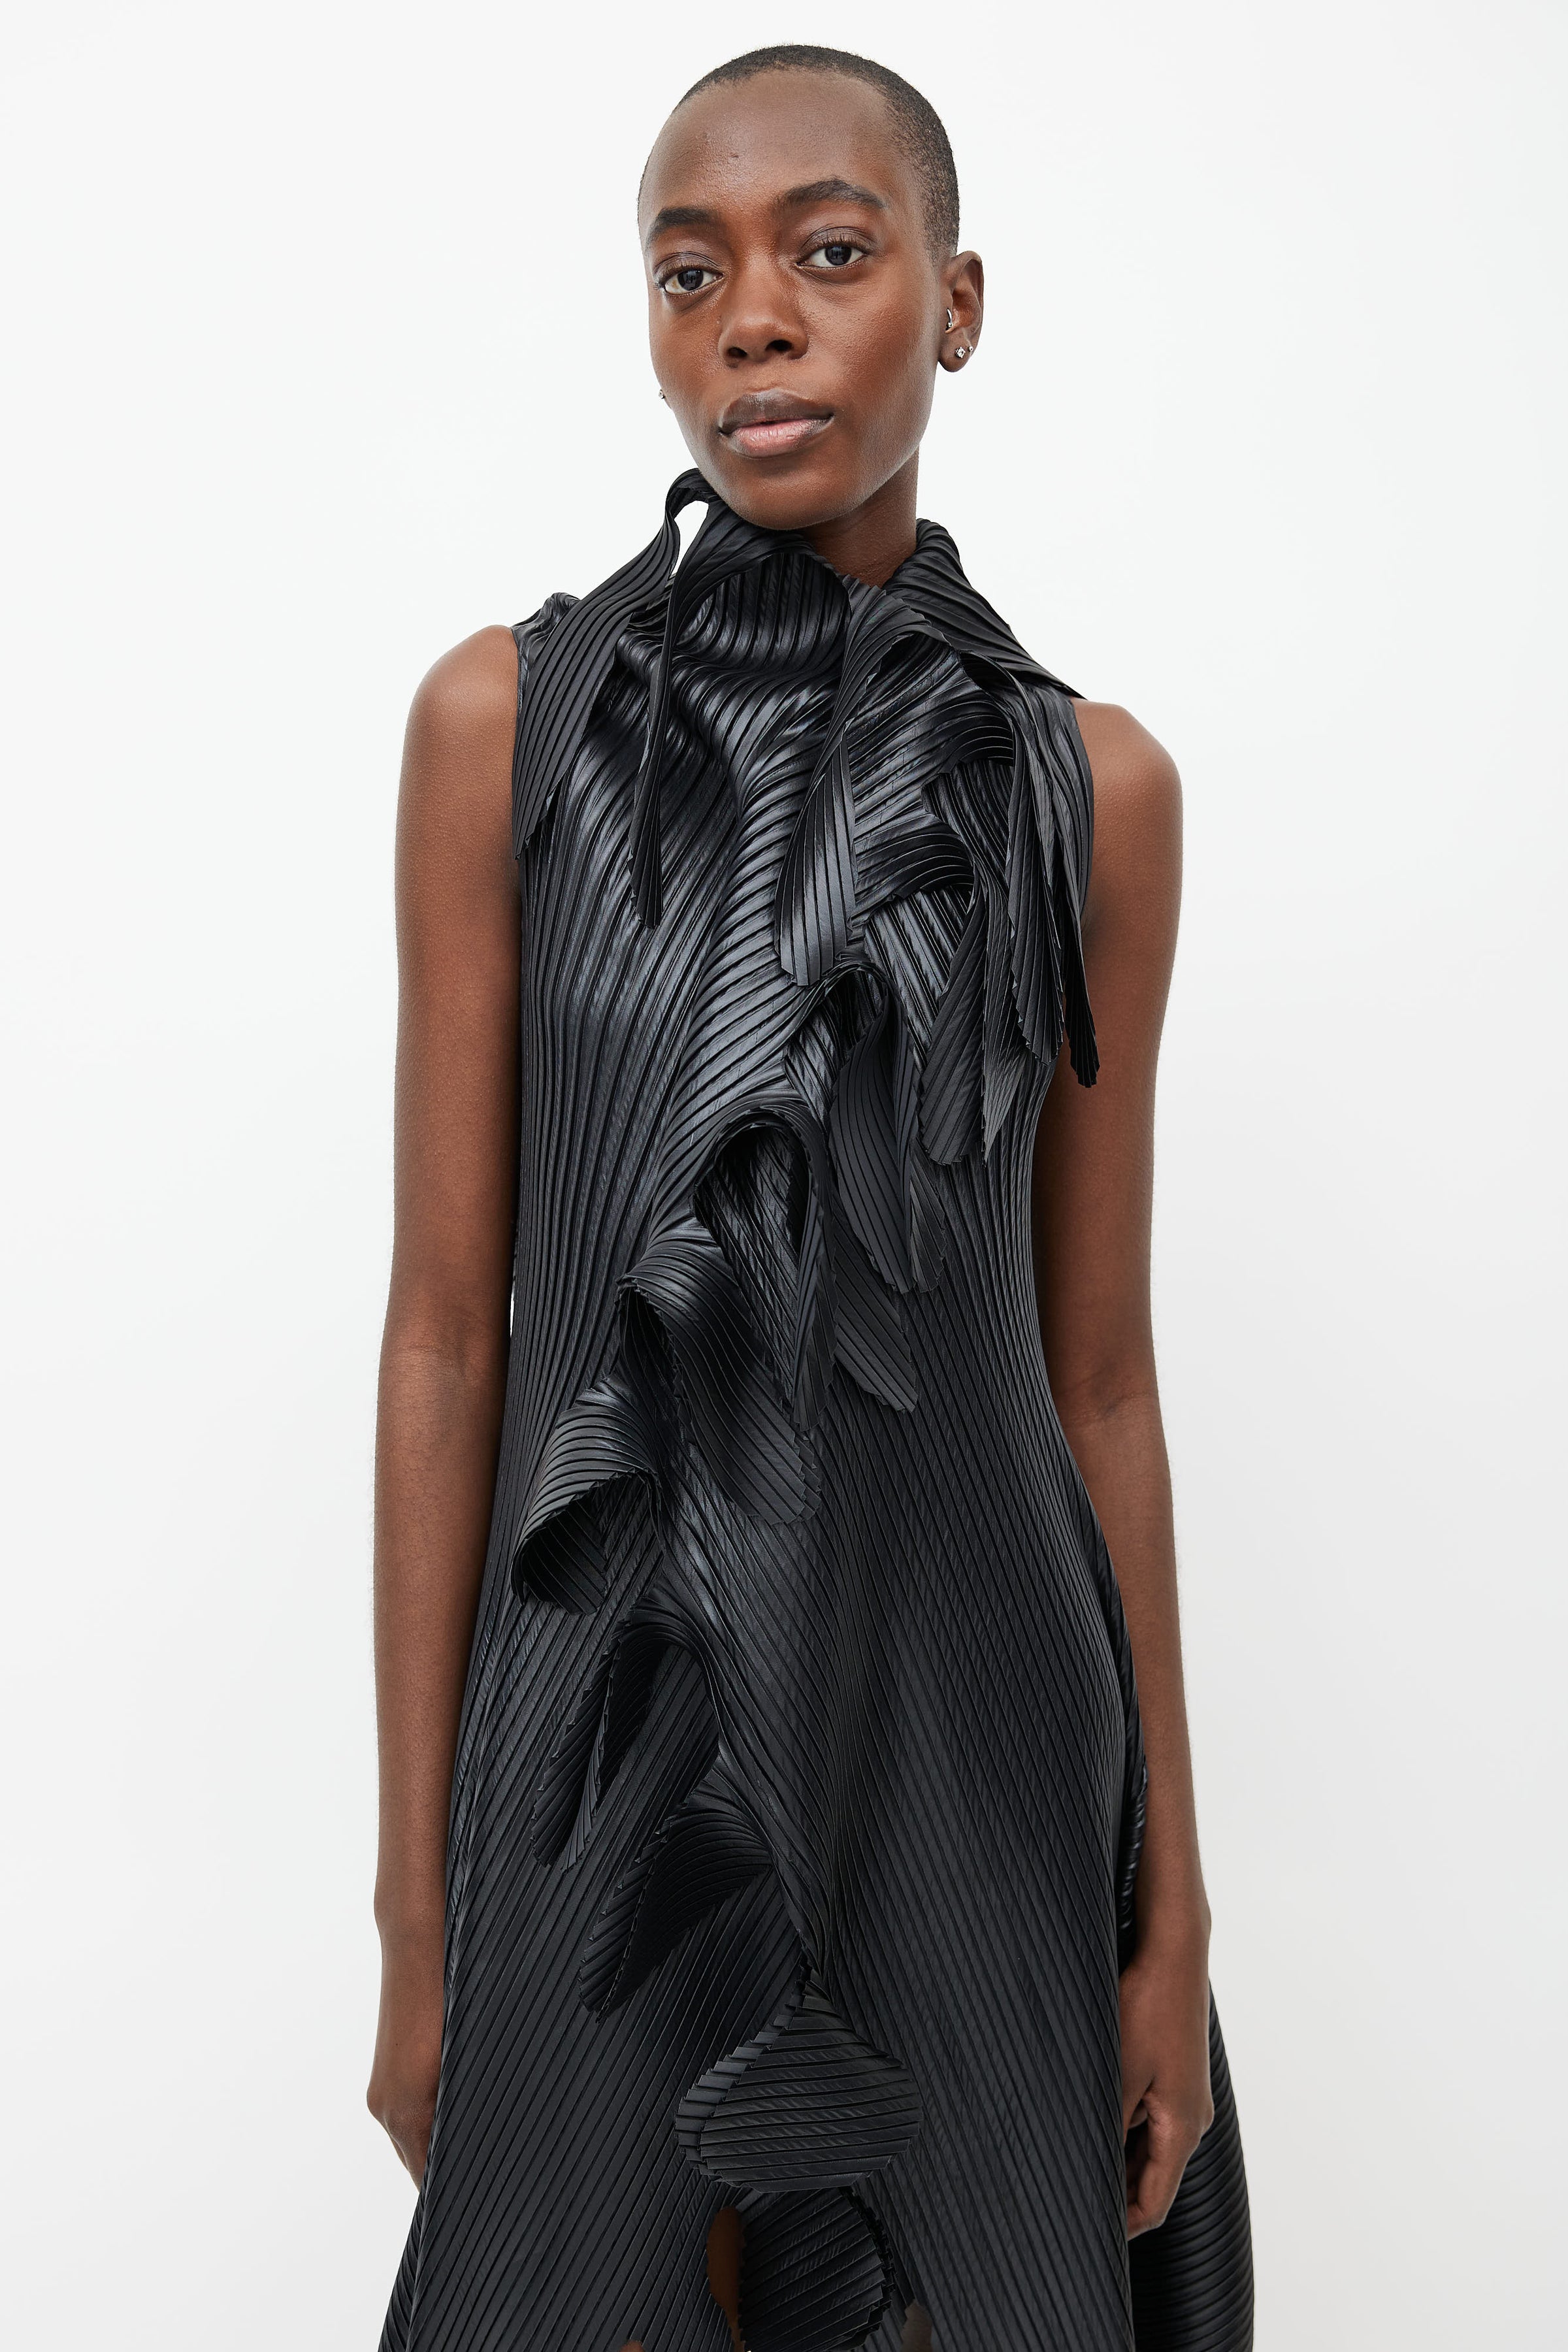 fantom Erobrer Bred vifte Issey Miyake // Black Sculptural Pleated Dress – VSP Consignment